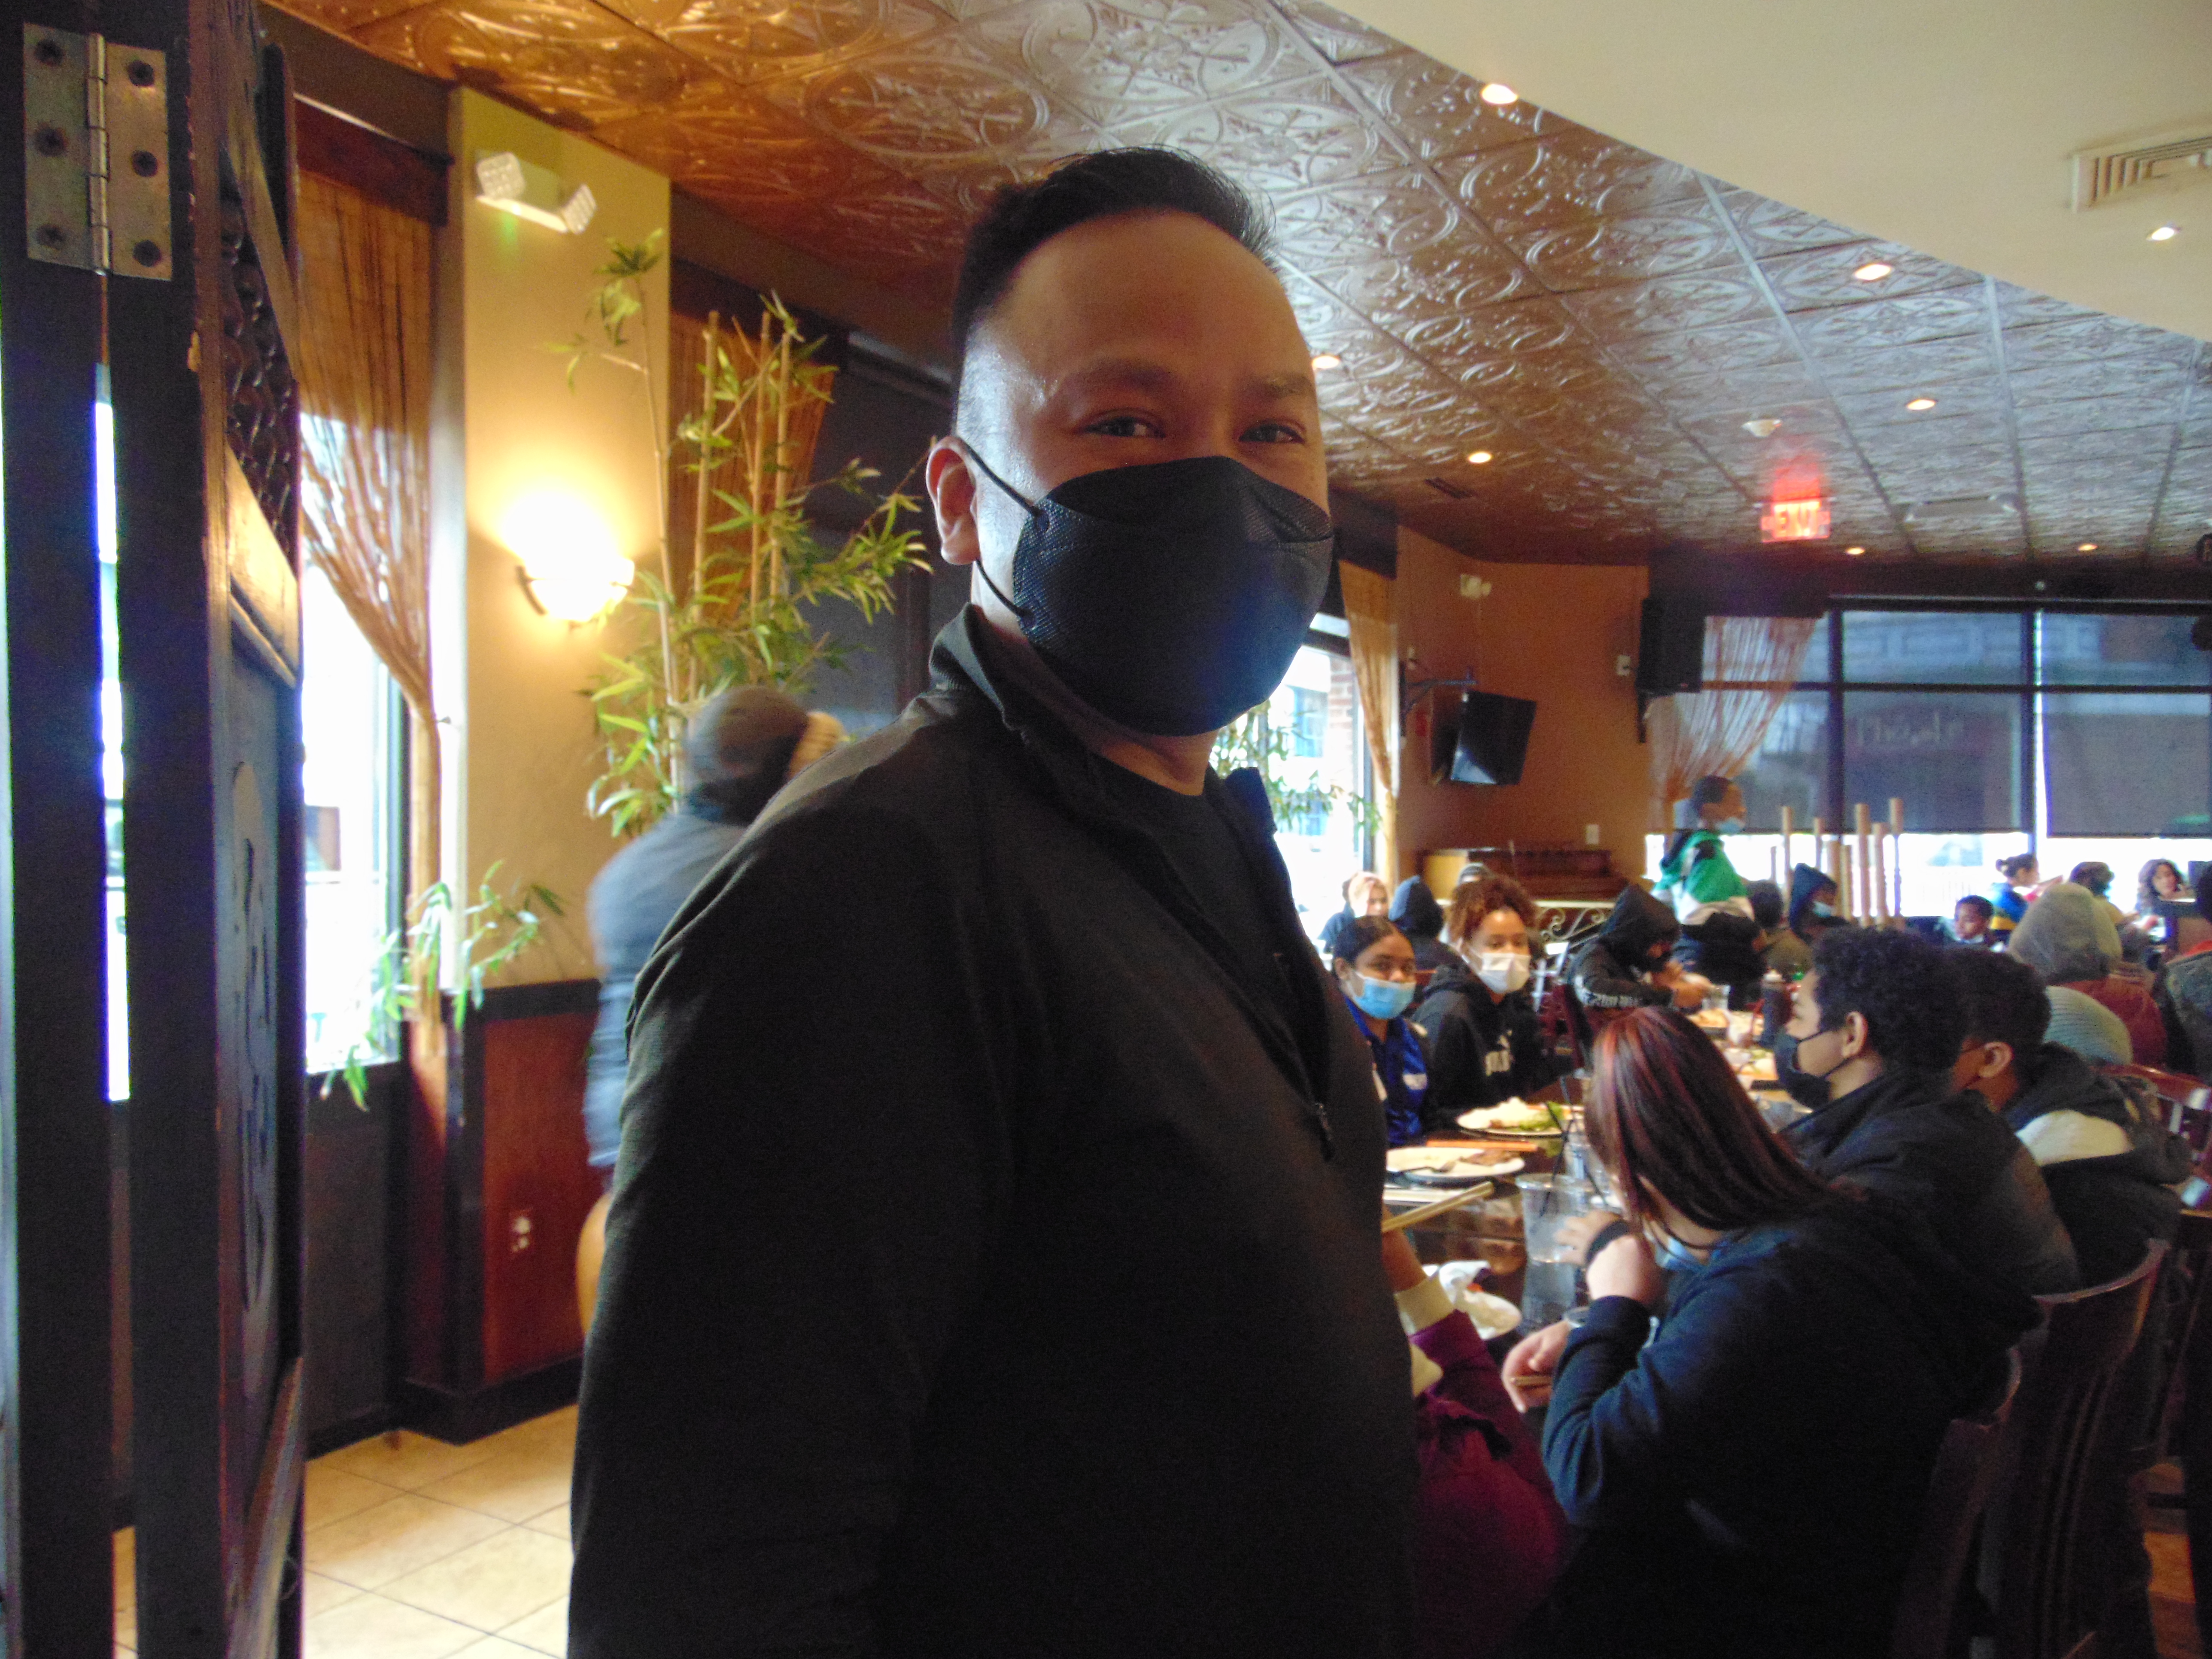 Tam Le poses for a photo inside his restaurant, Pho Hoa